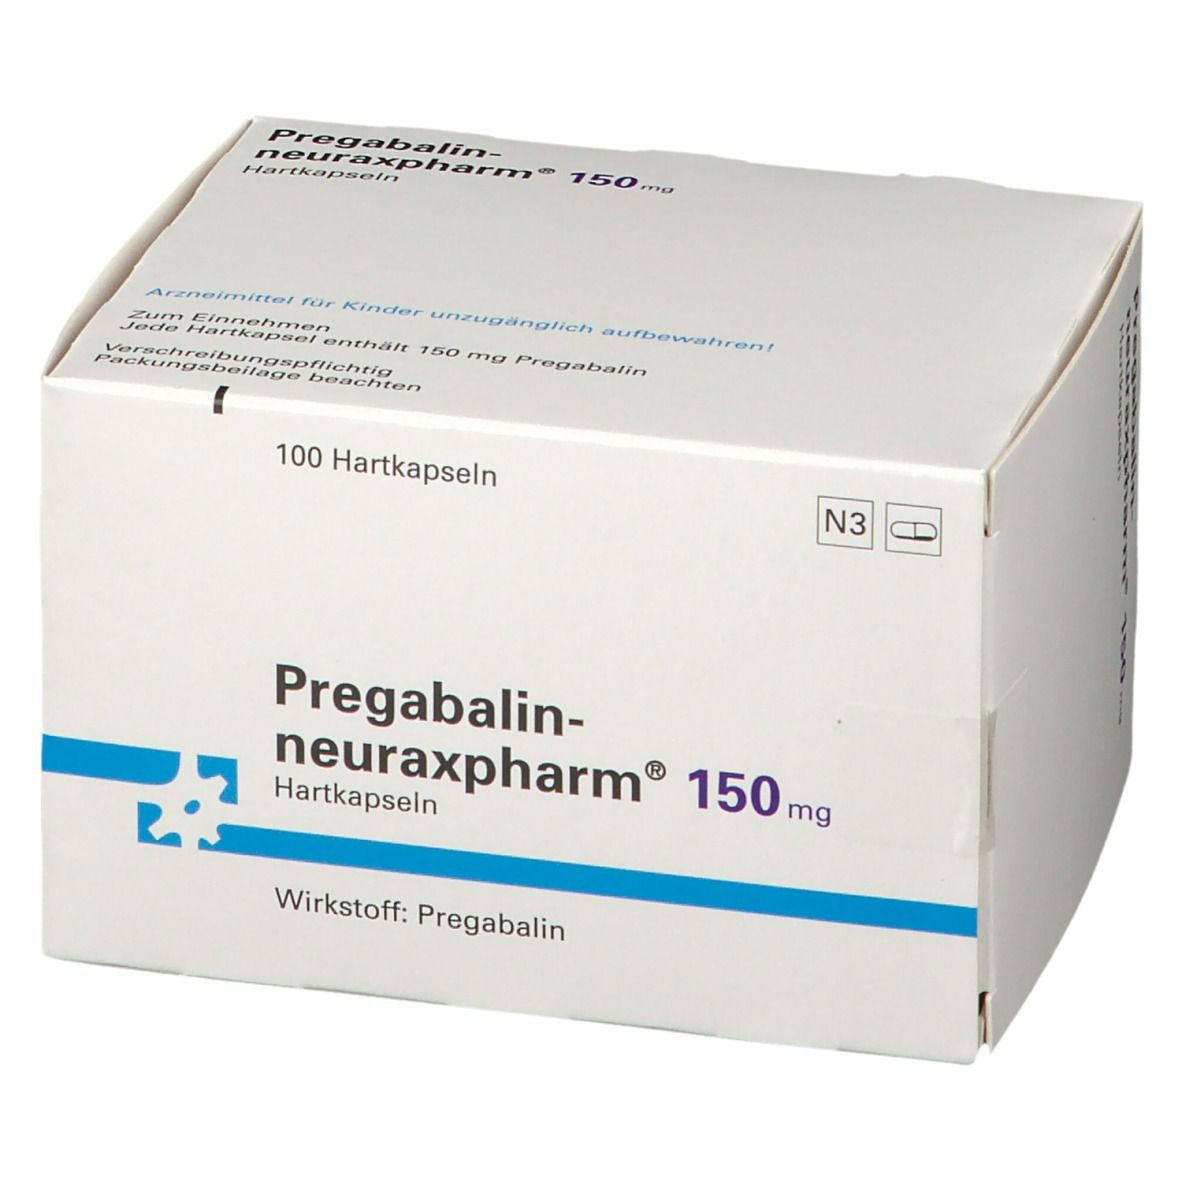 Pregabalin-neuraxpharm® 150 mg